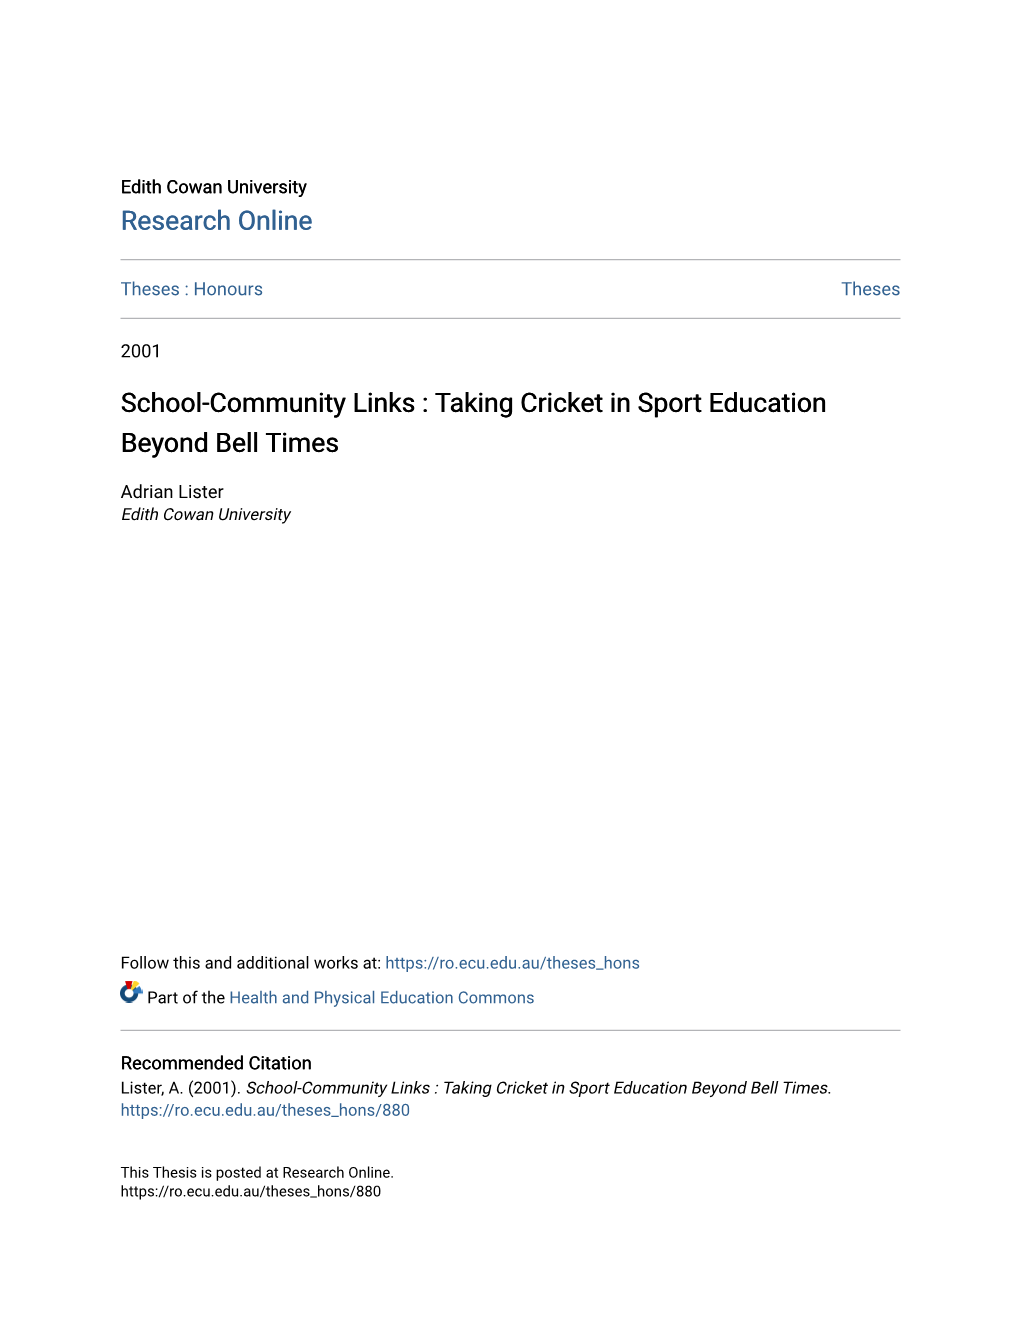 School-Community Links : Taking Cricket in Sport Education Beyond Bell Times